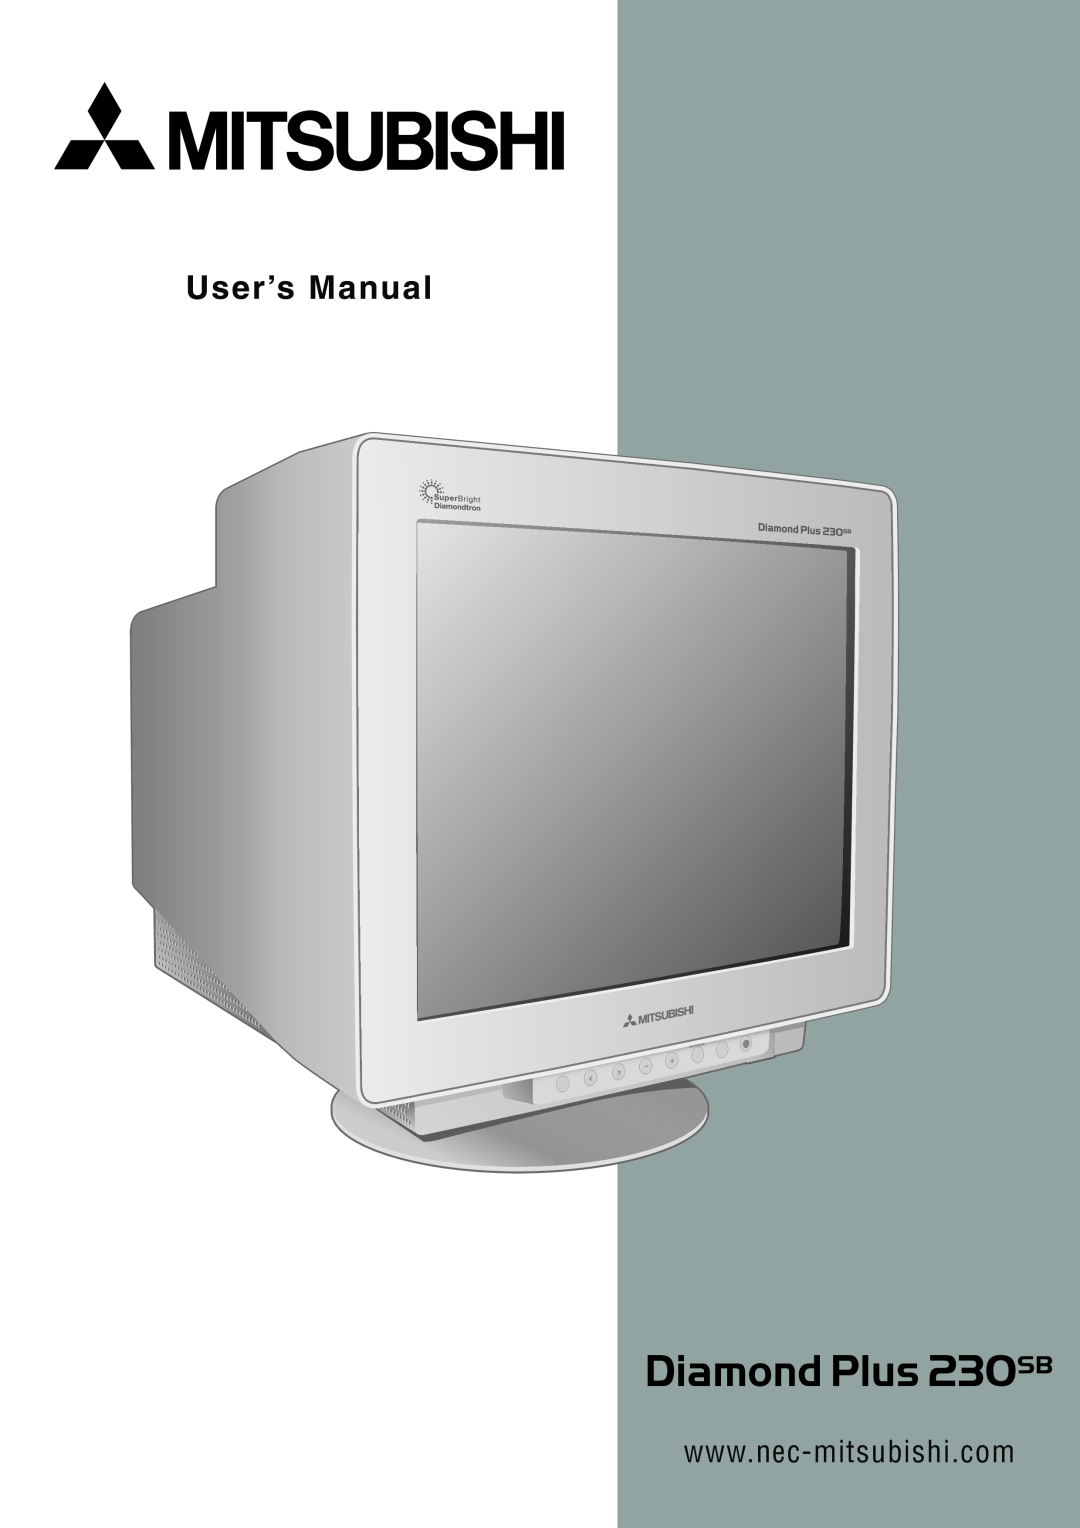 Mitsubishi Electronics 230SB user manual User’s Manual 